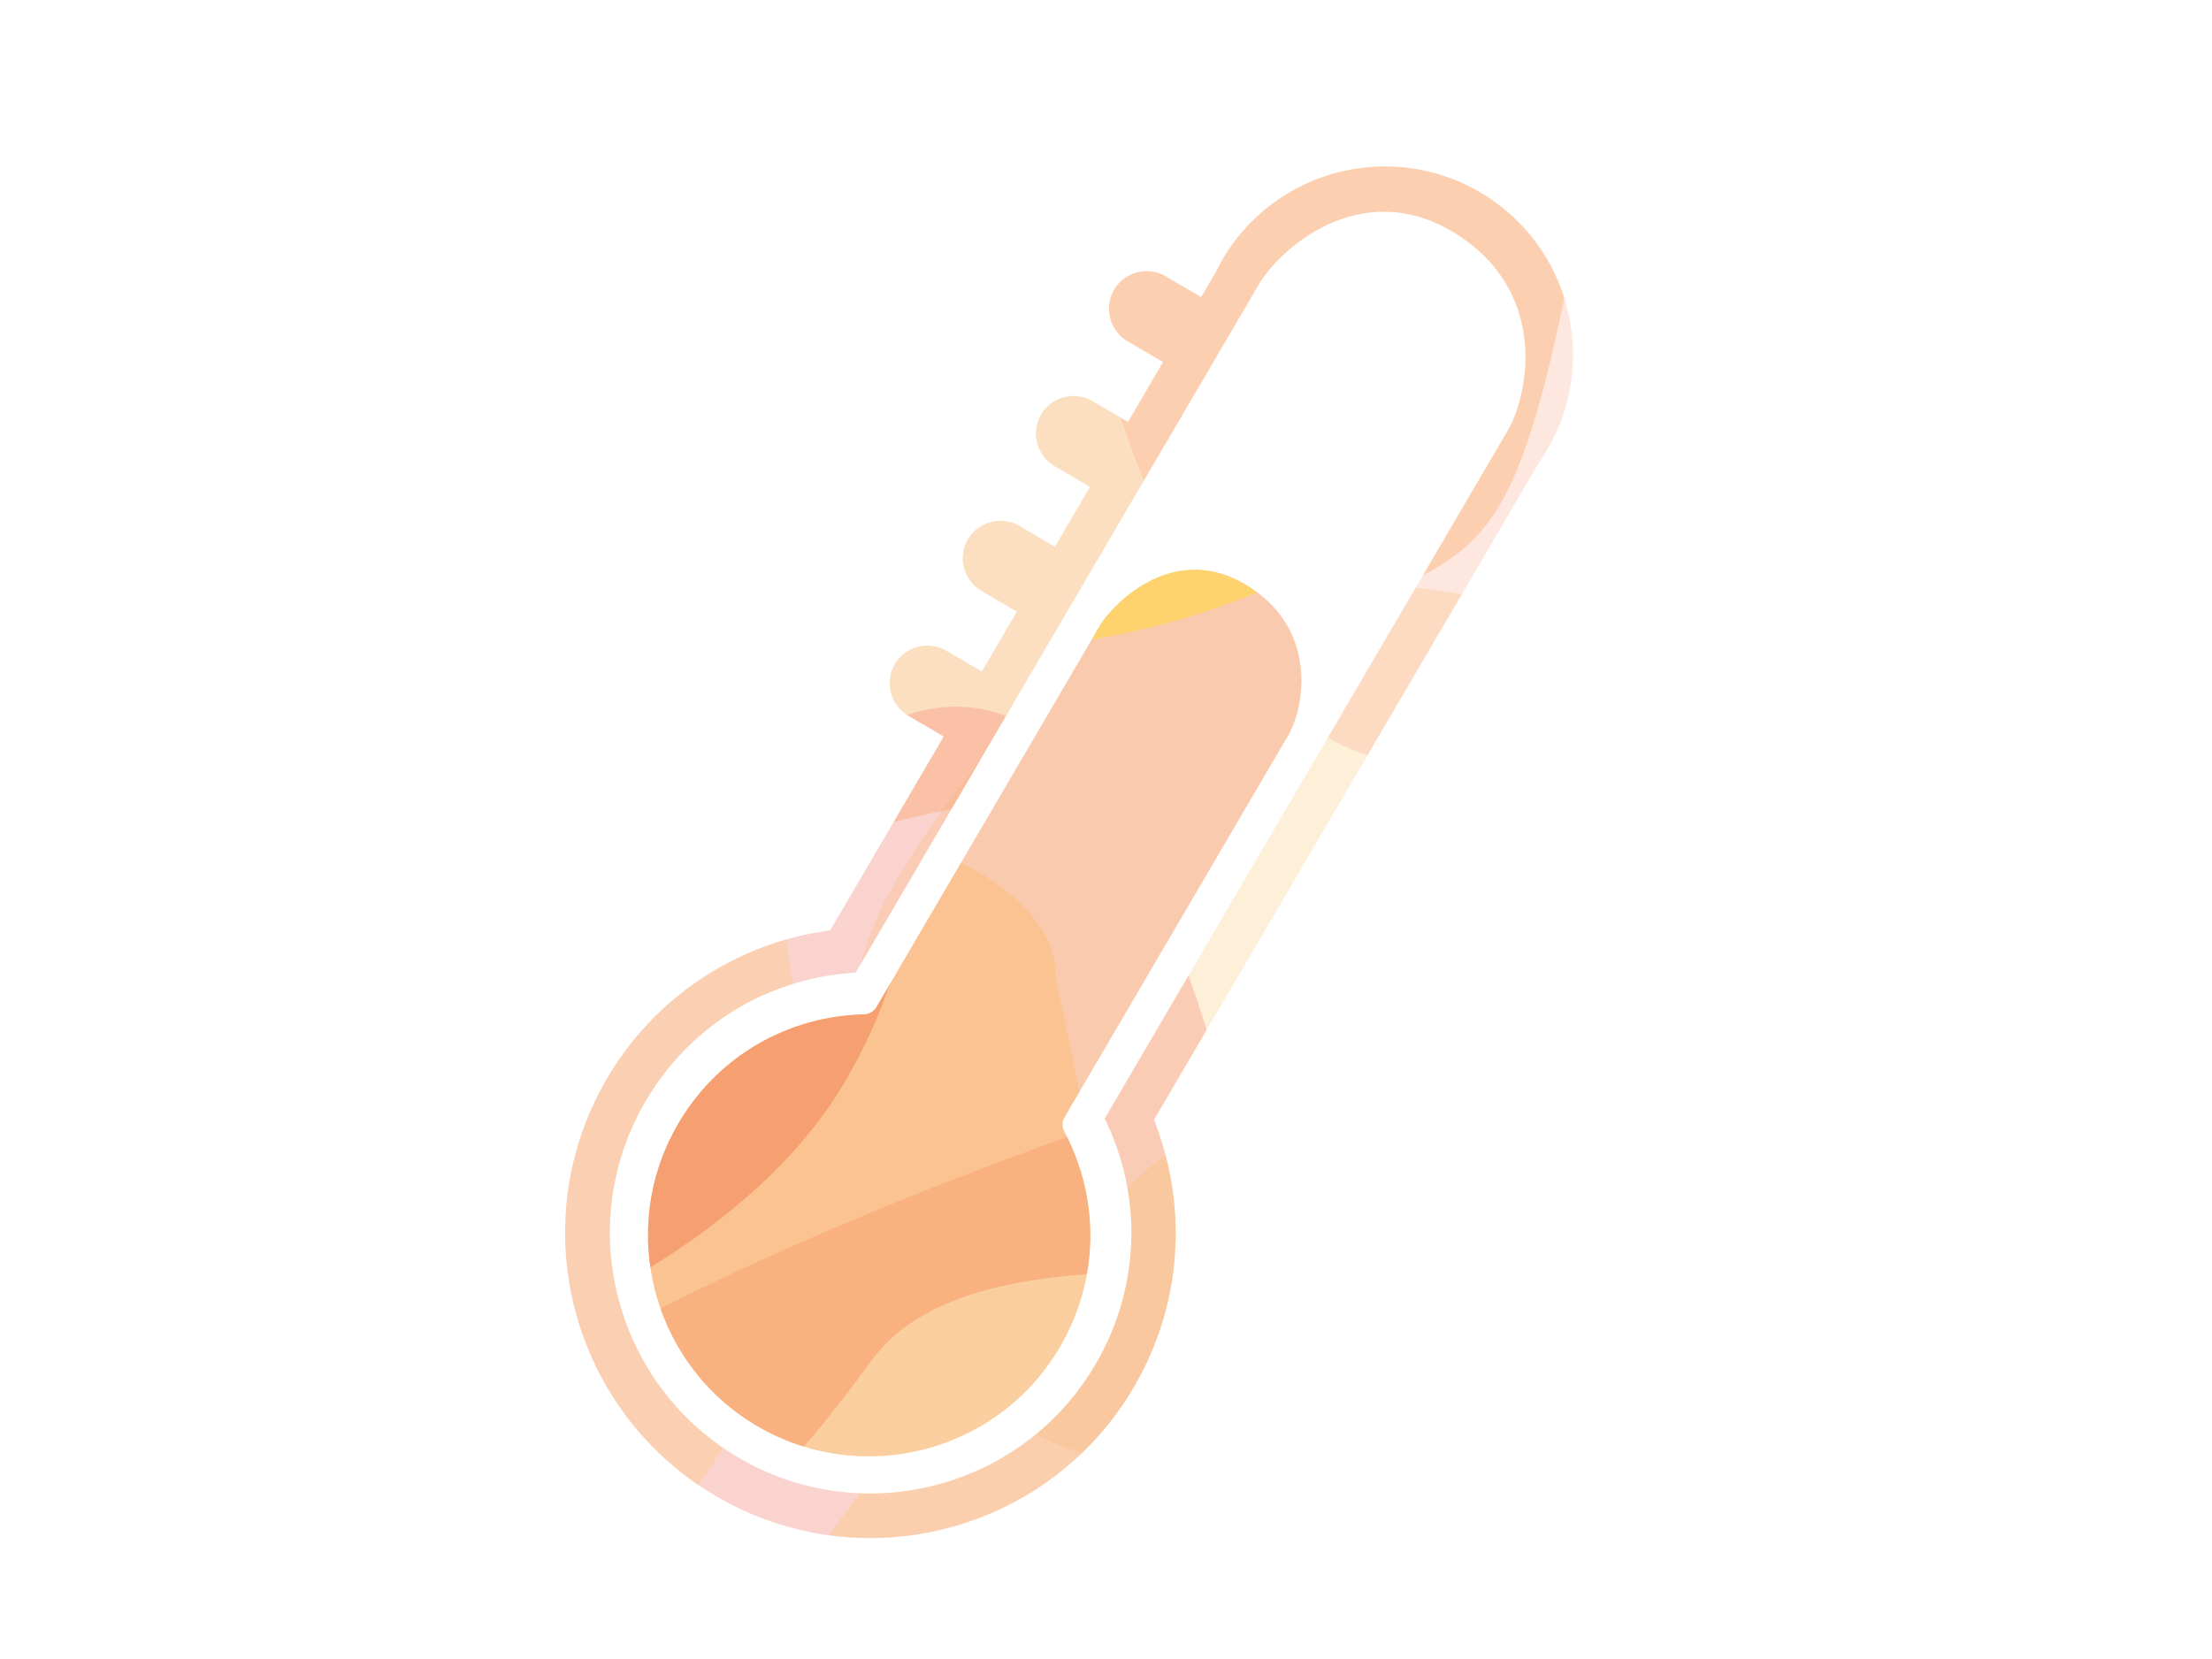 Light orange illustration of a thermometer